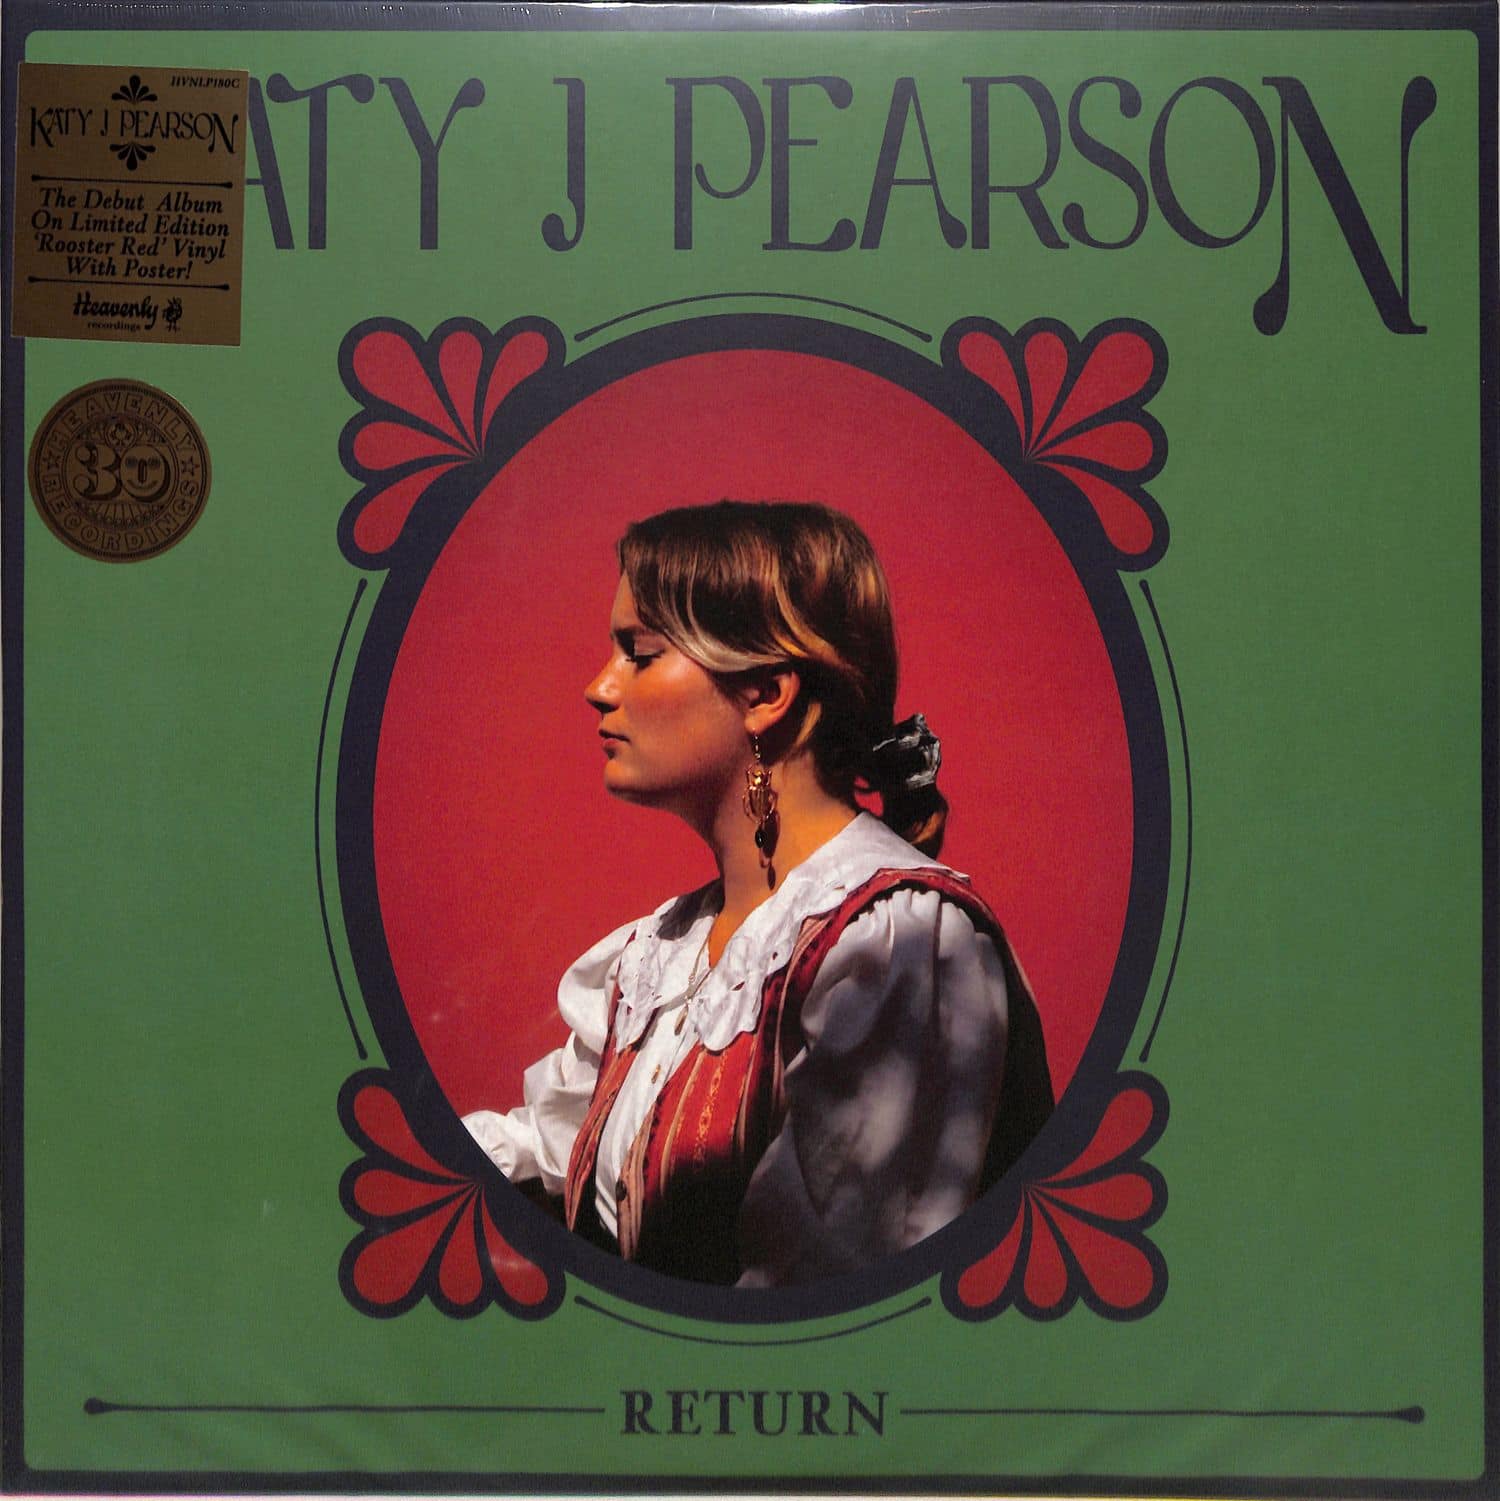 Katy J Pearson - RETURN 